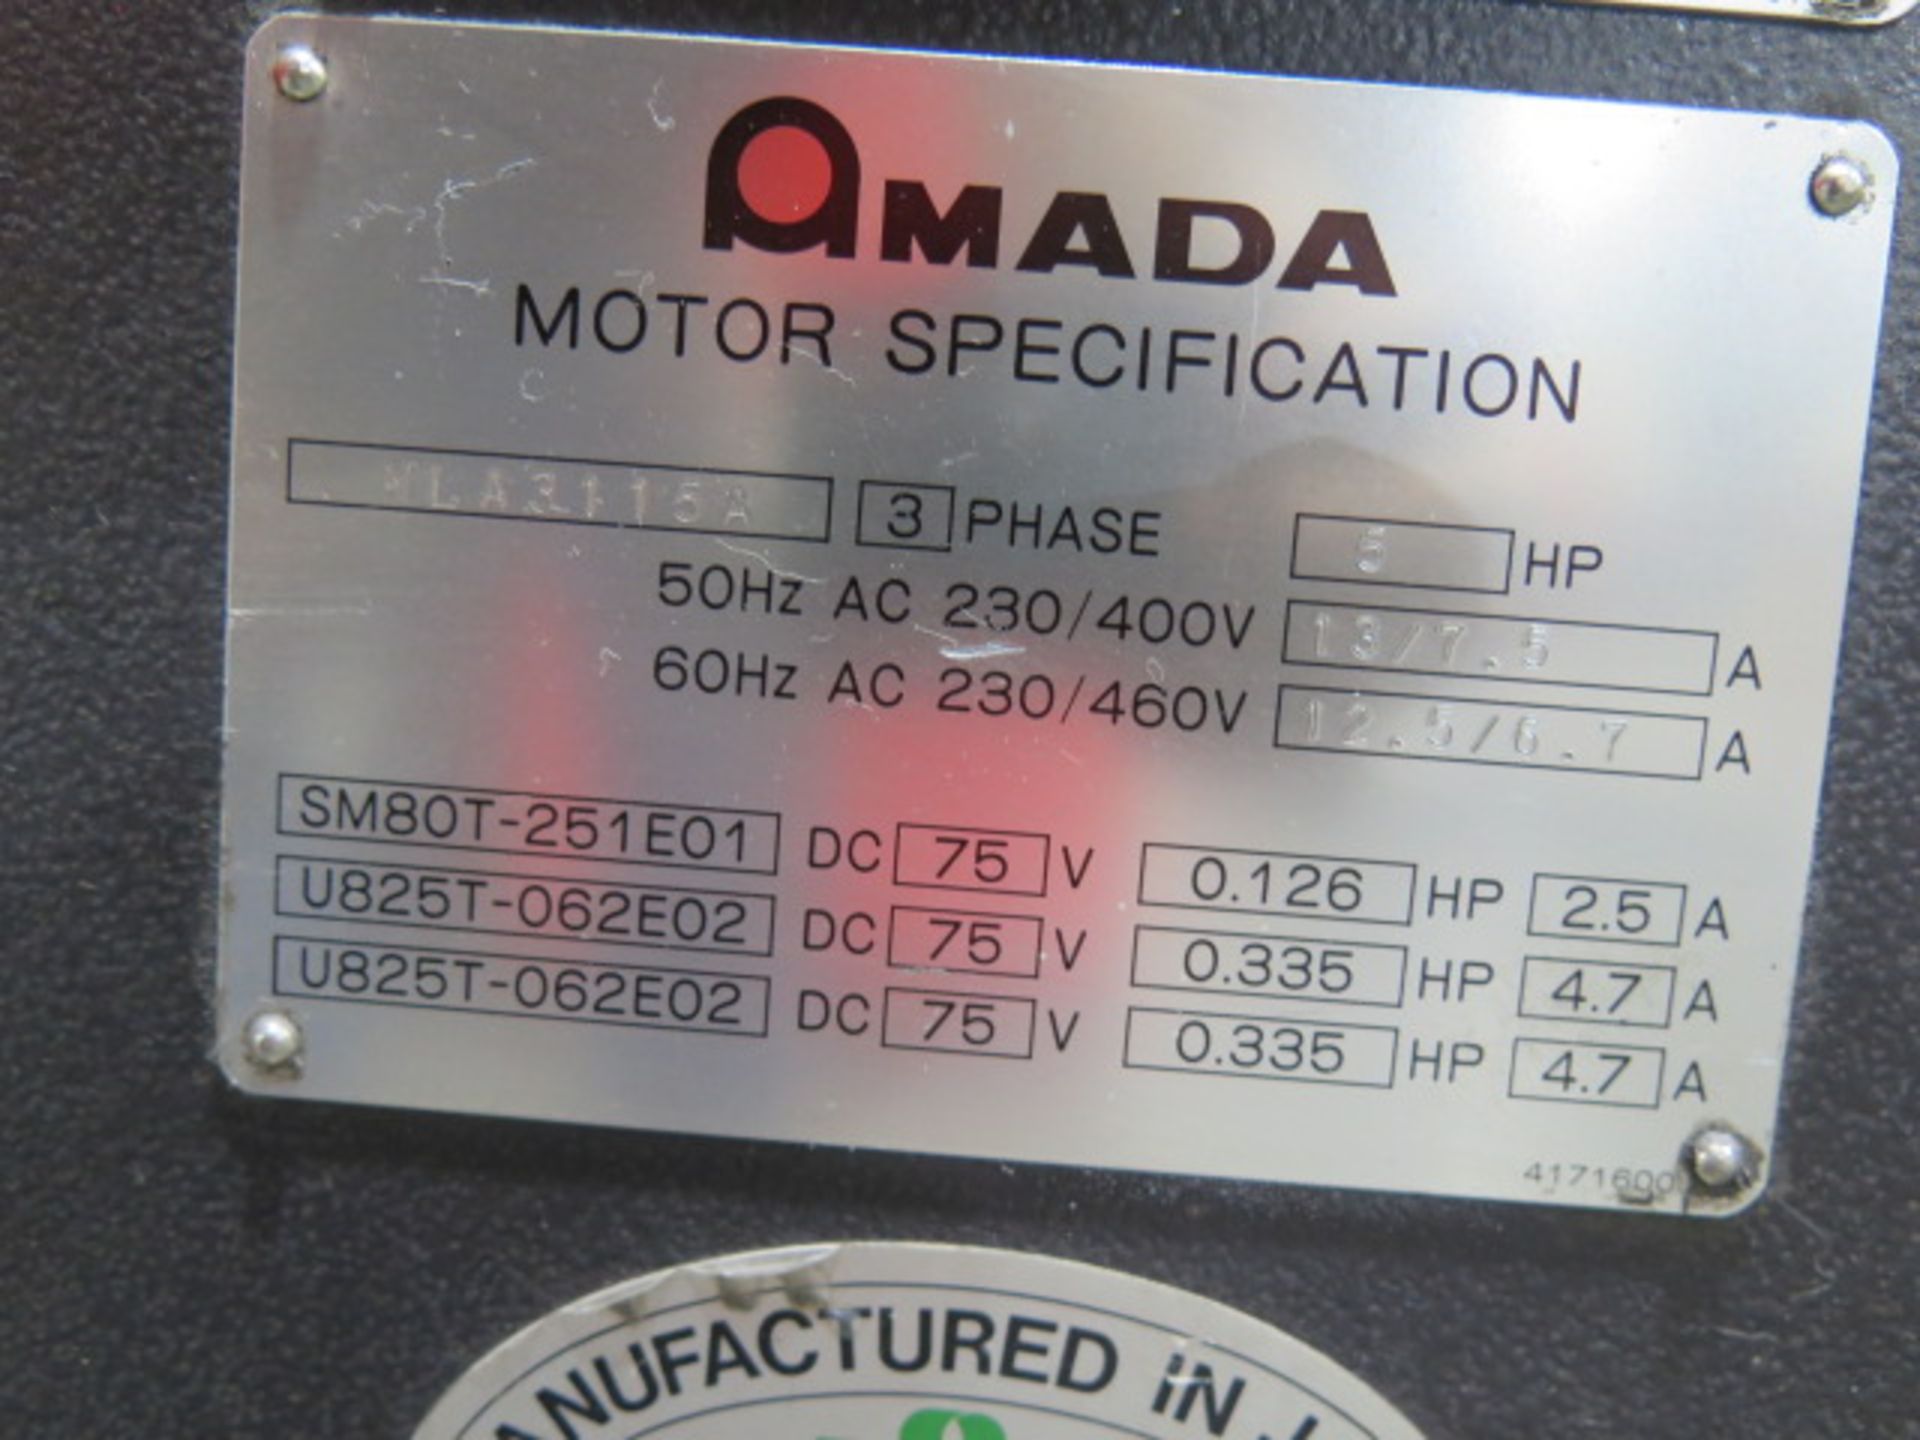 Amada RG-50D mdl. FBD-5020E 50 Ton x 78” CNC Press Brake s/n 5200132 w/ Amada NC9-EX Controls, 78.7” - Image 12 of 12